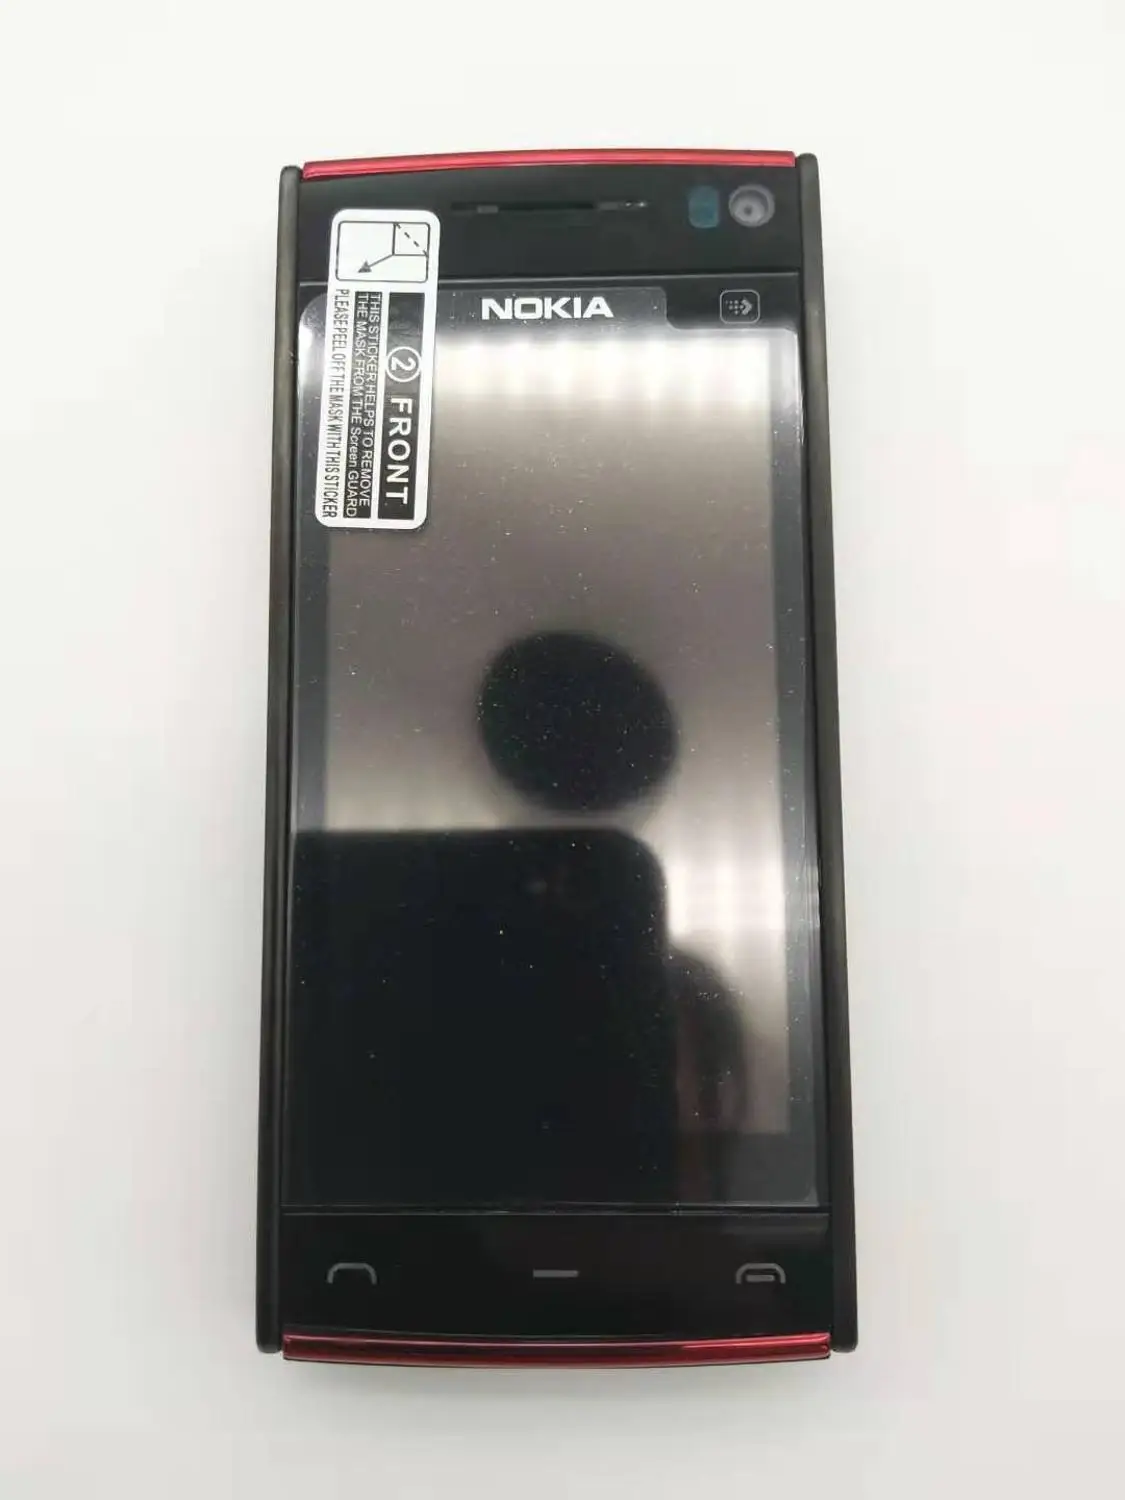 nokia x62009 refurbished original nokia x6 00 phone quad band fm radio gsm symbianram 128mb rom 16gb cellphone refurbished free global shipping